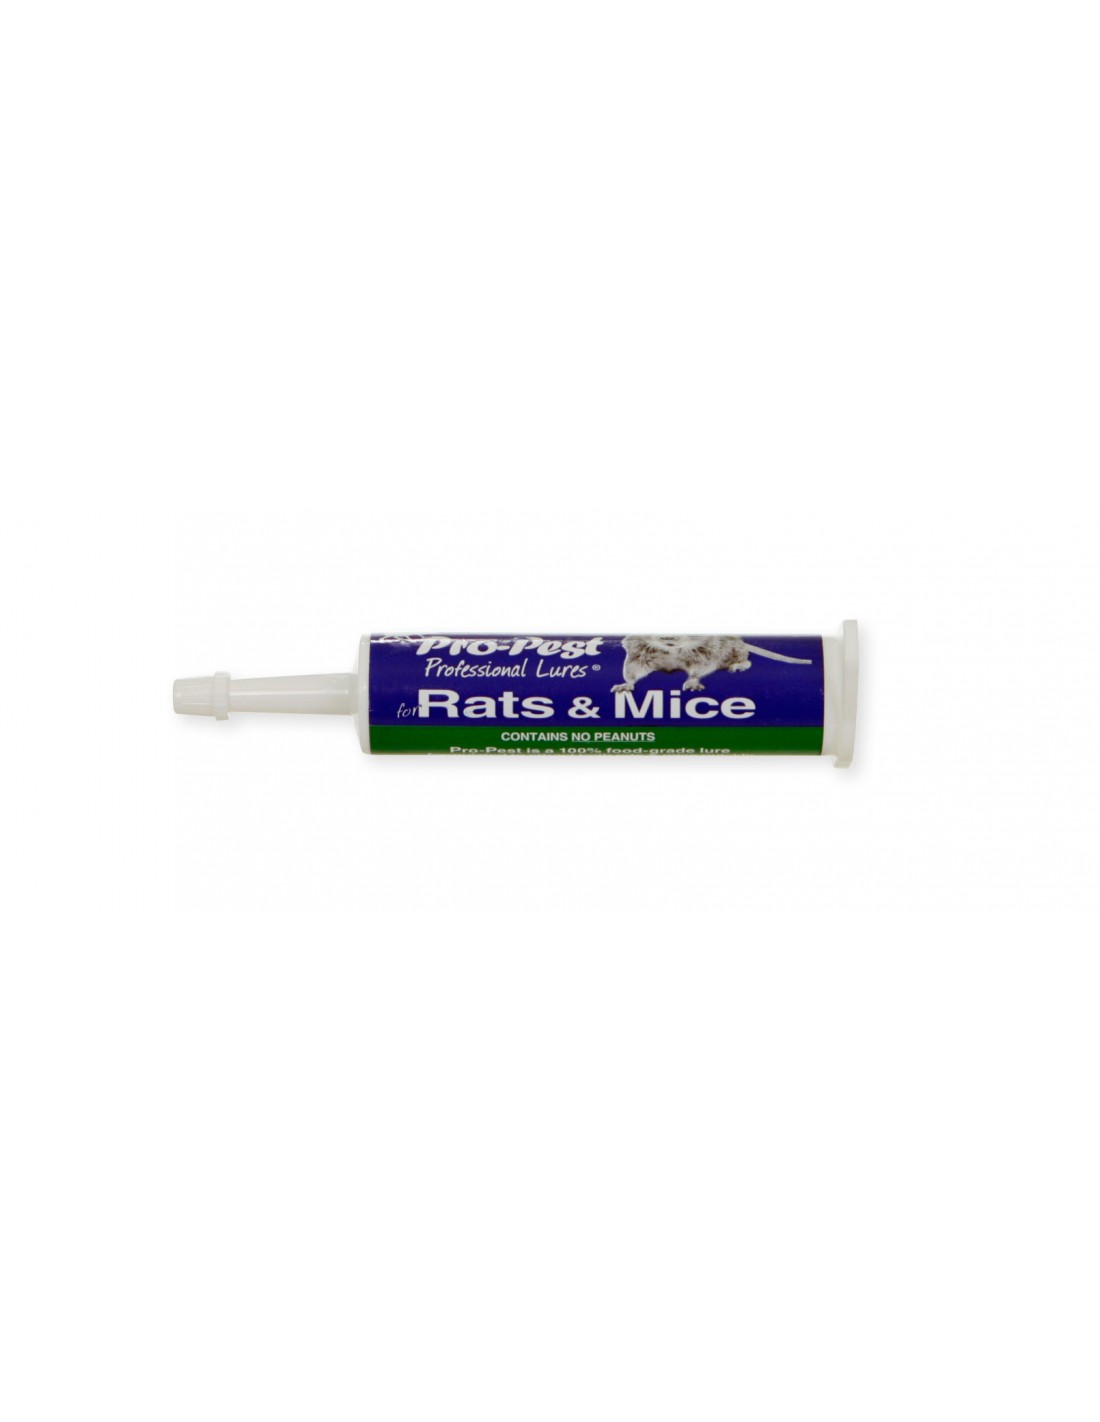 Pro Pest Professional Lure 2-1.5oz Cartridges Rats Mice